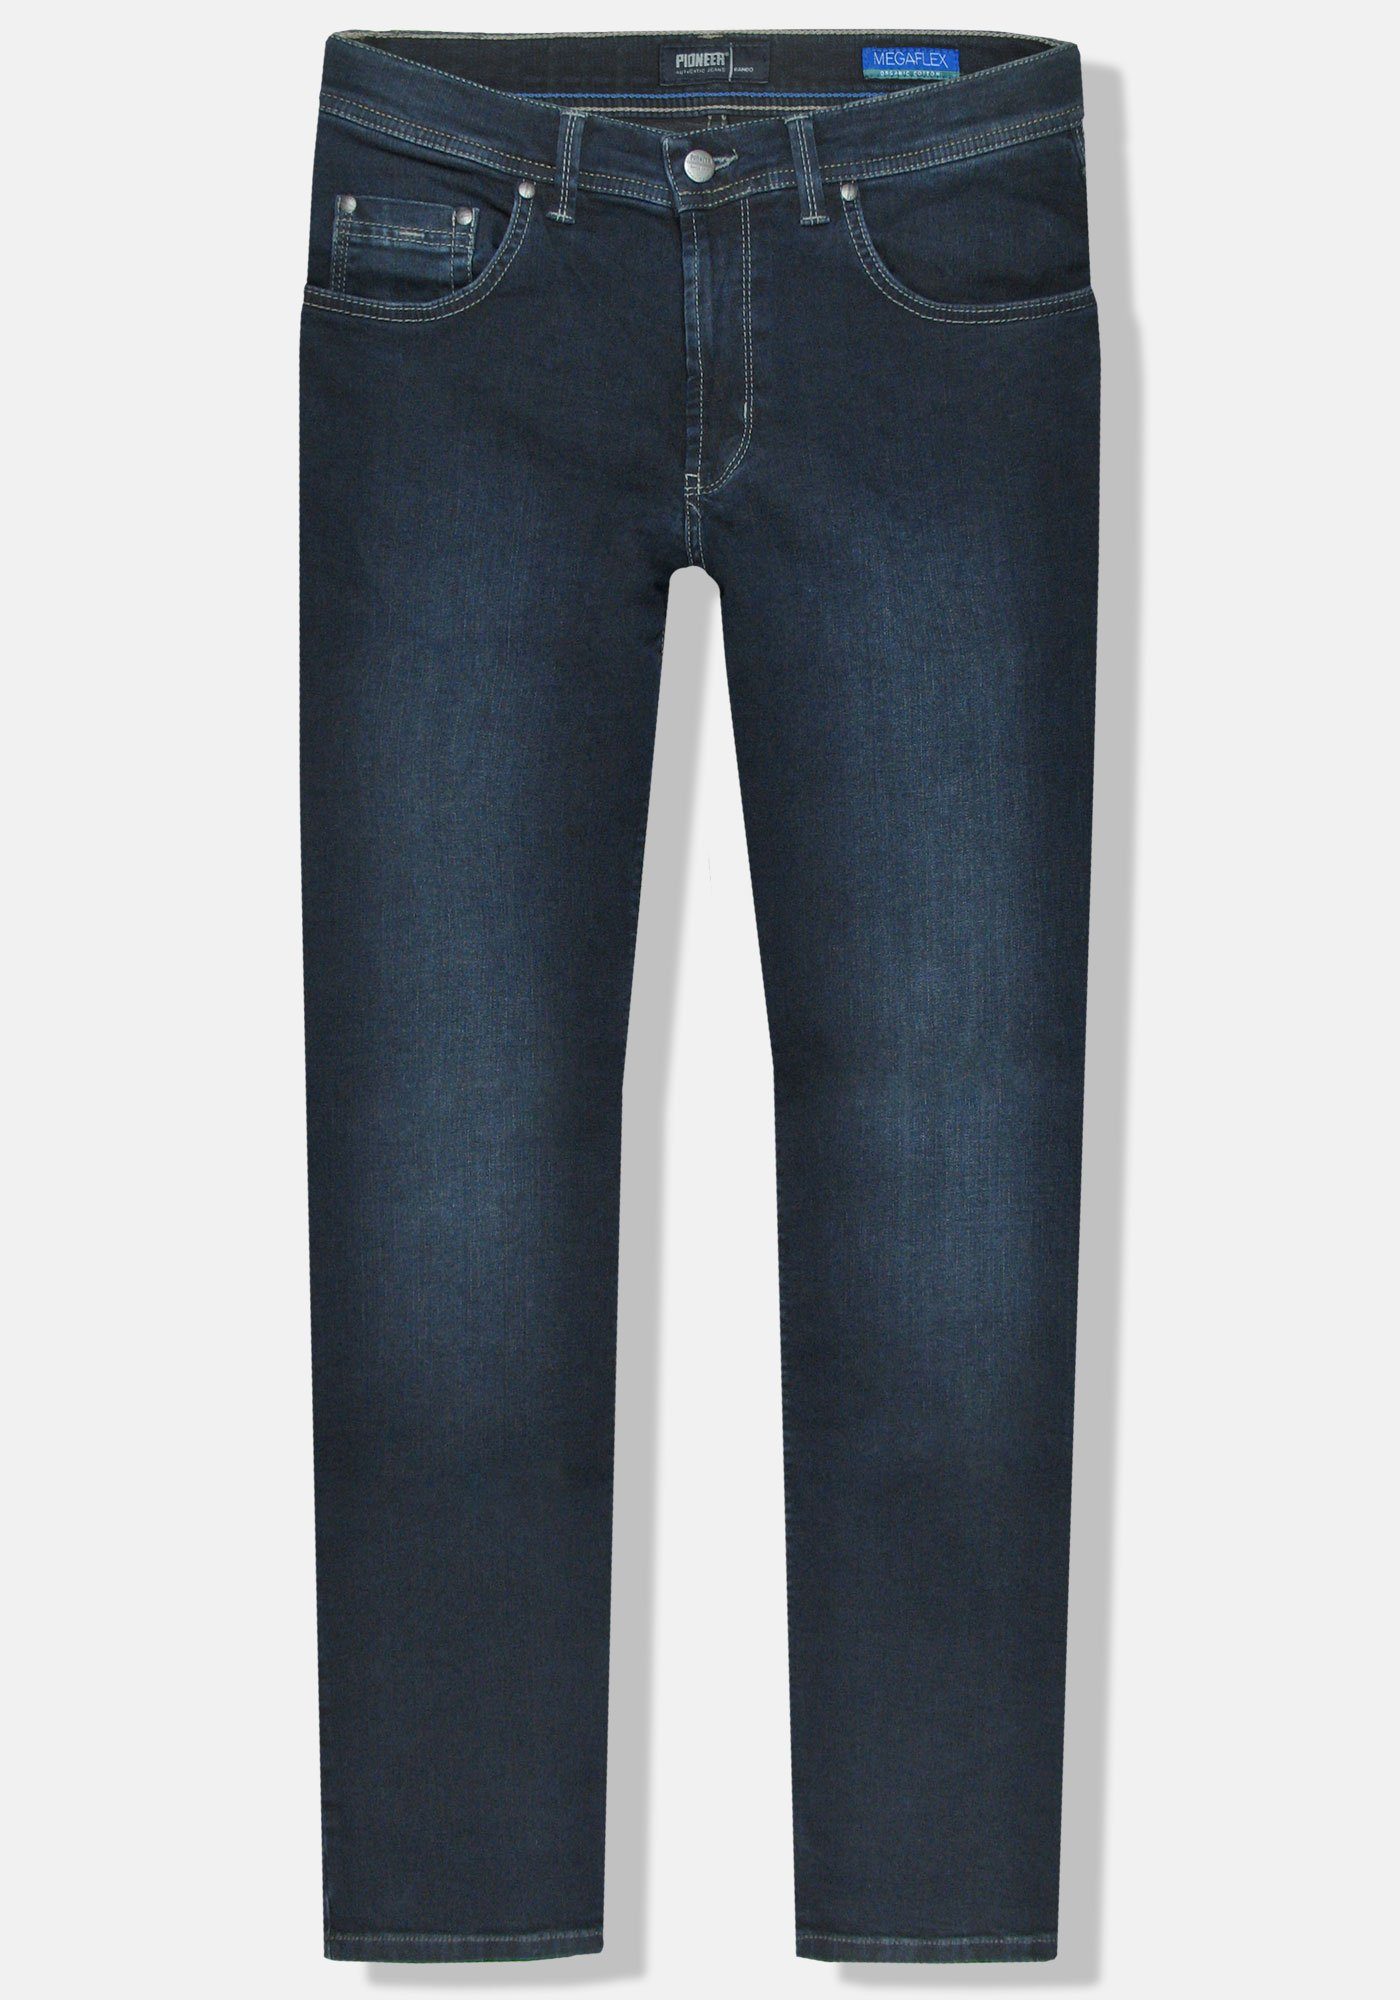 Pioneer Authentic Stretch-Denim Used Rando Blue Megaflex Night 5-Pocket-Jeans Jeans